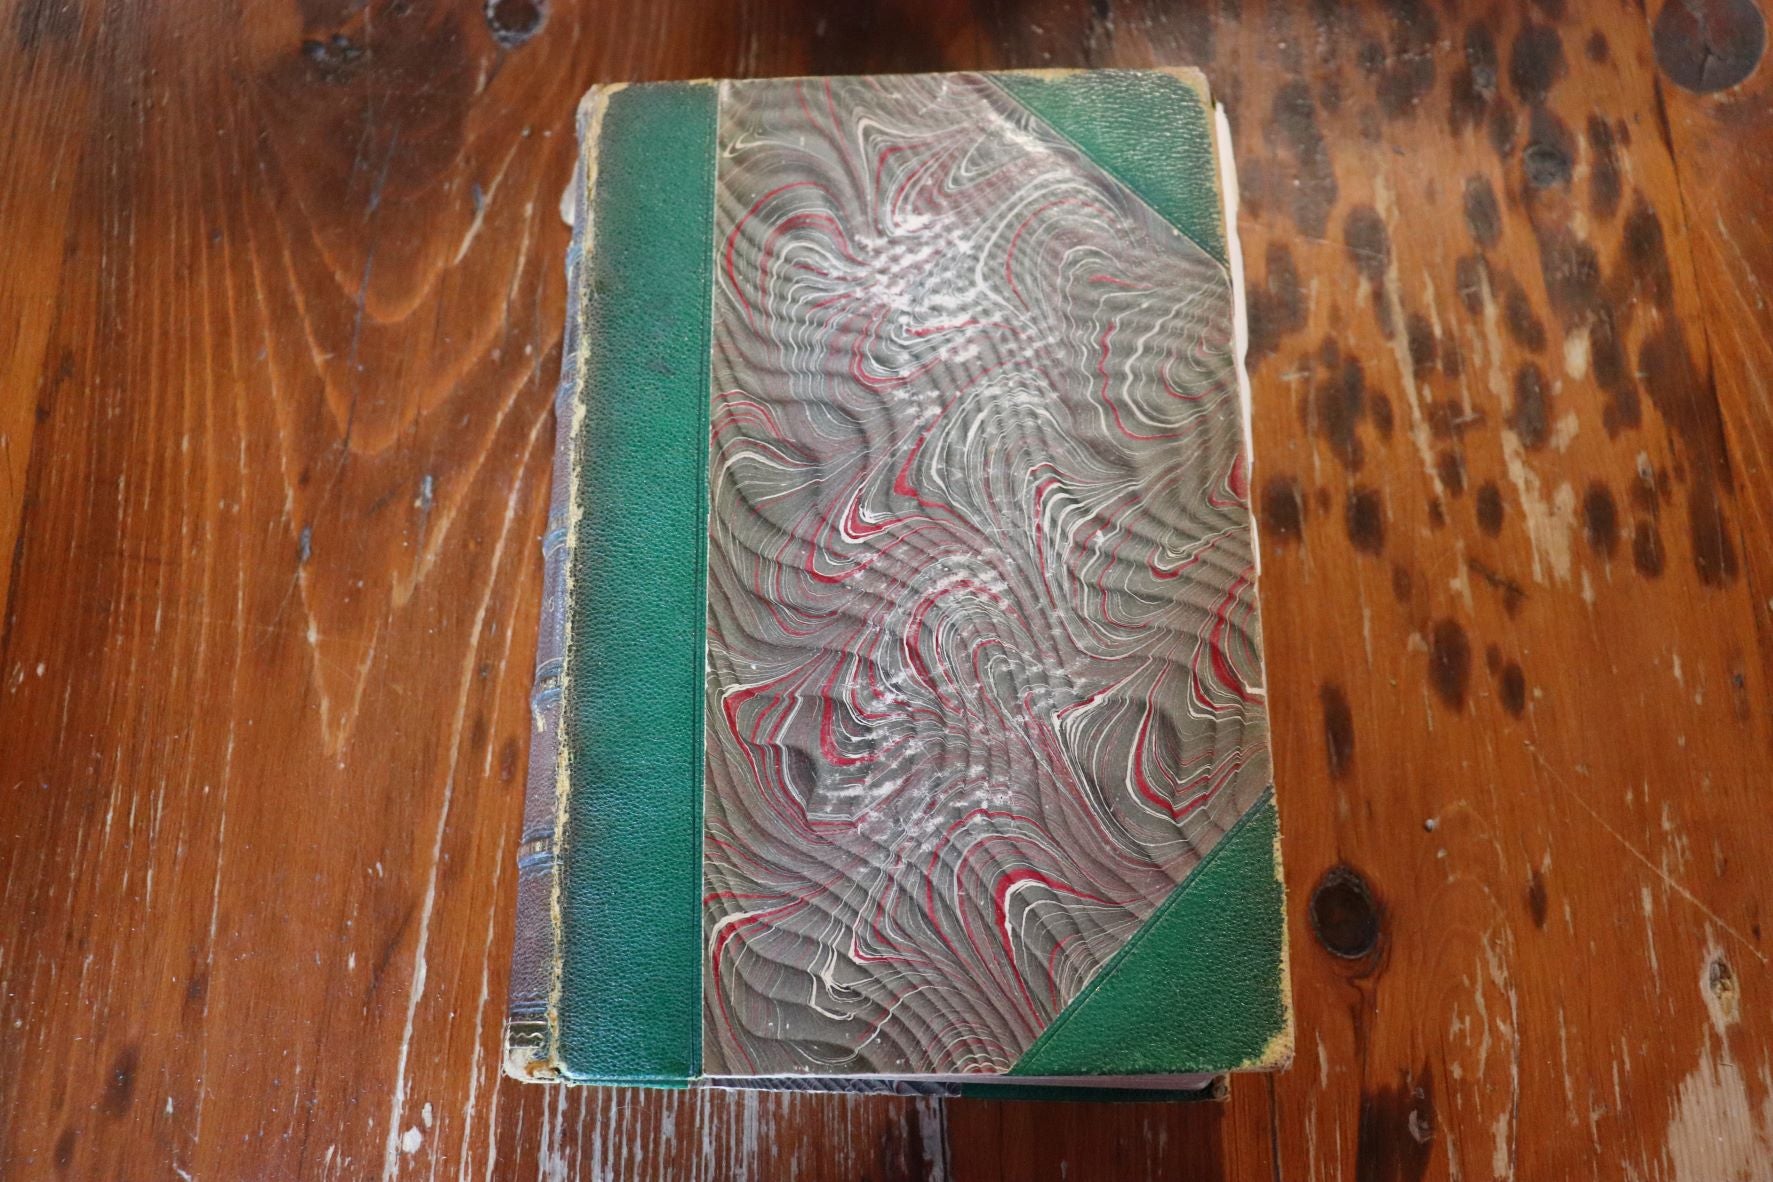 The Waverley Novels - Sir Walter Scott - Volume 2 - Guy Mannering - 1852